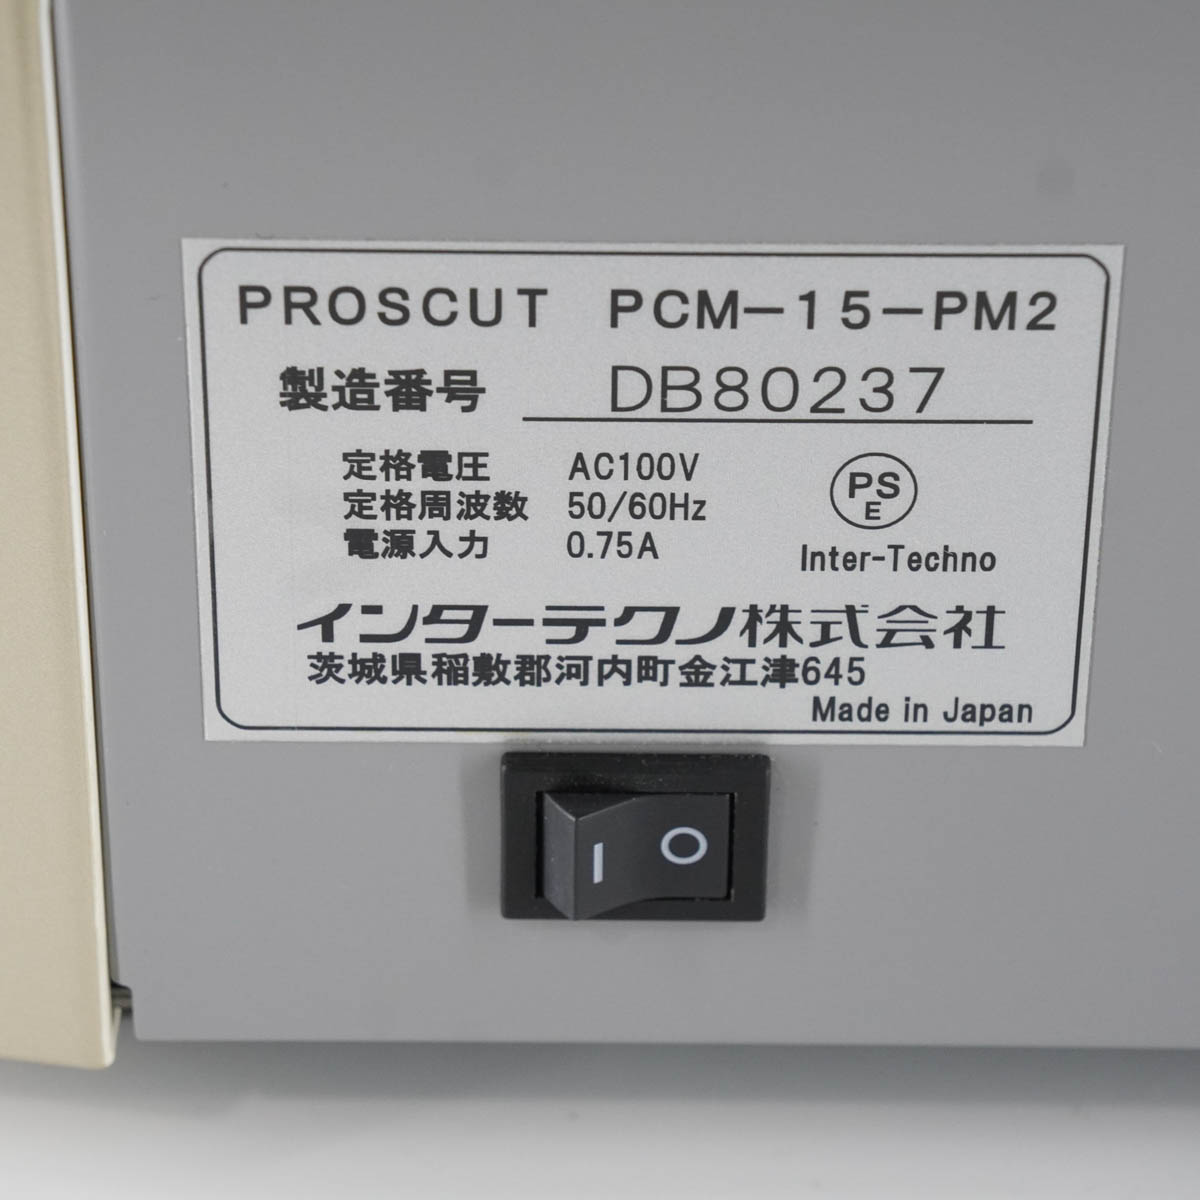 JB]USED 現状販売 インターテクノ PCM-15-PM2 PROSCUT プロスカット